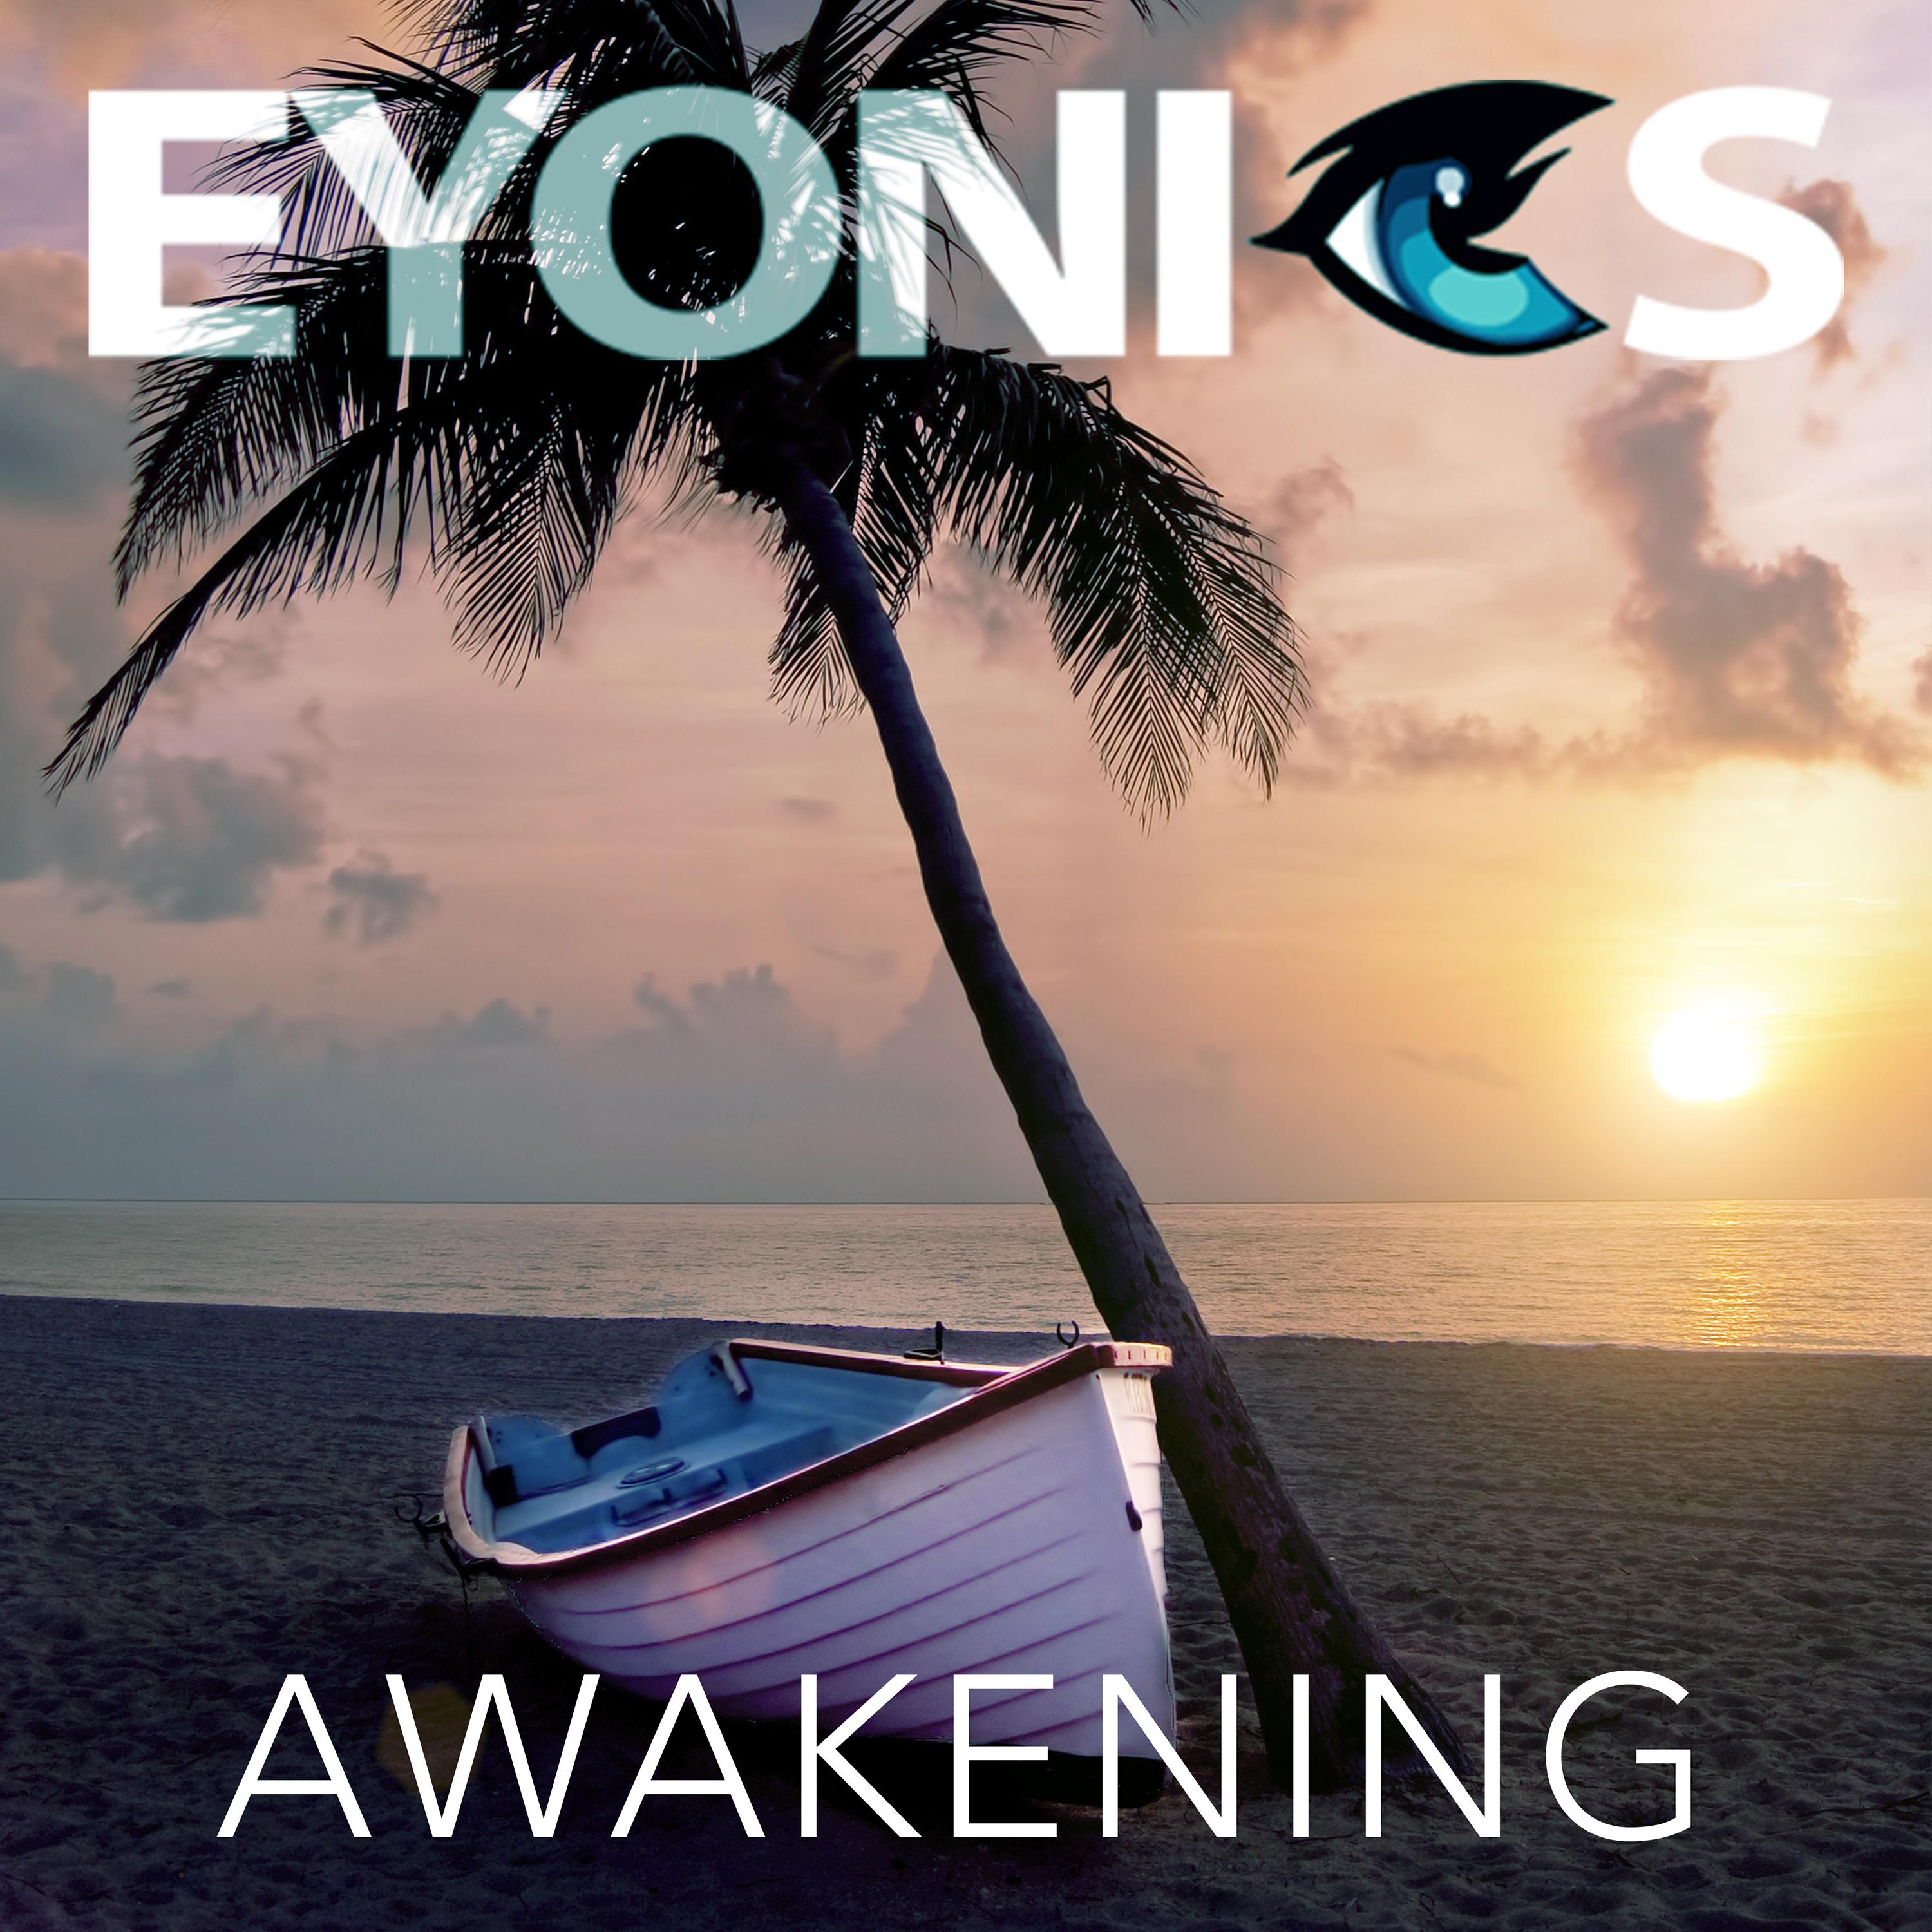 Eyonics - Awakening (Beach Radio Mix)